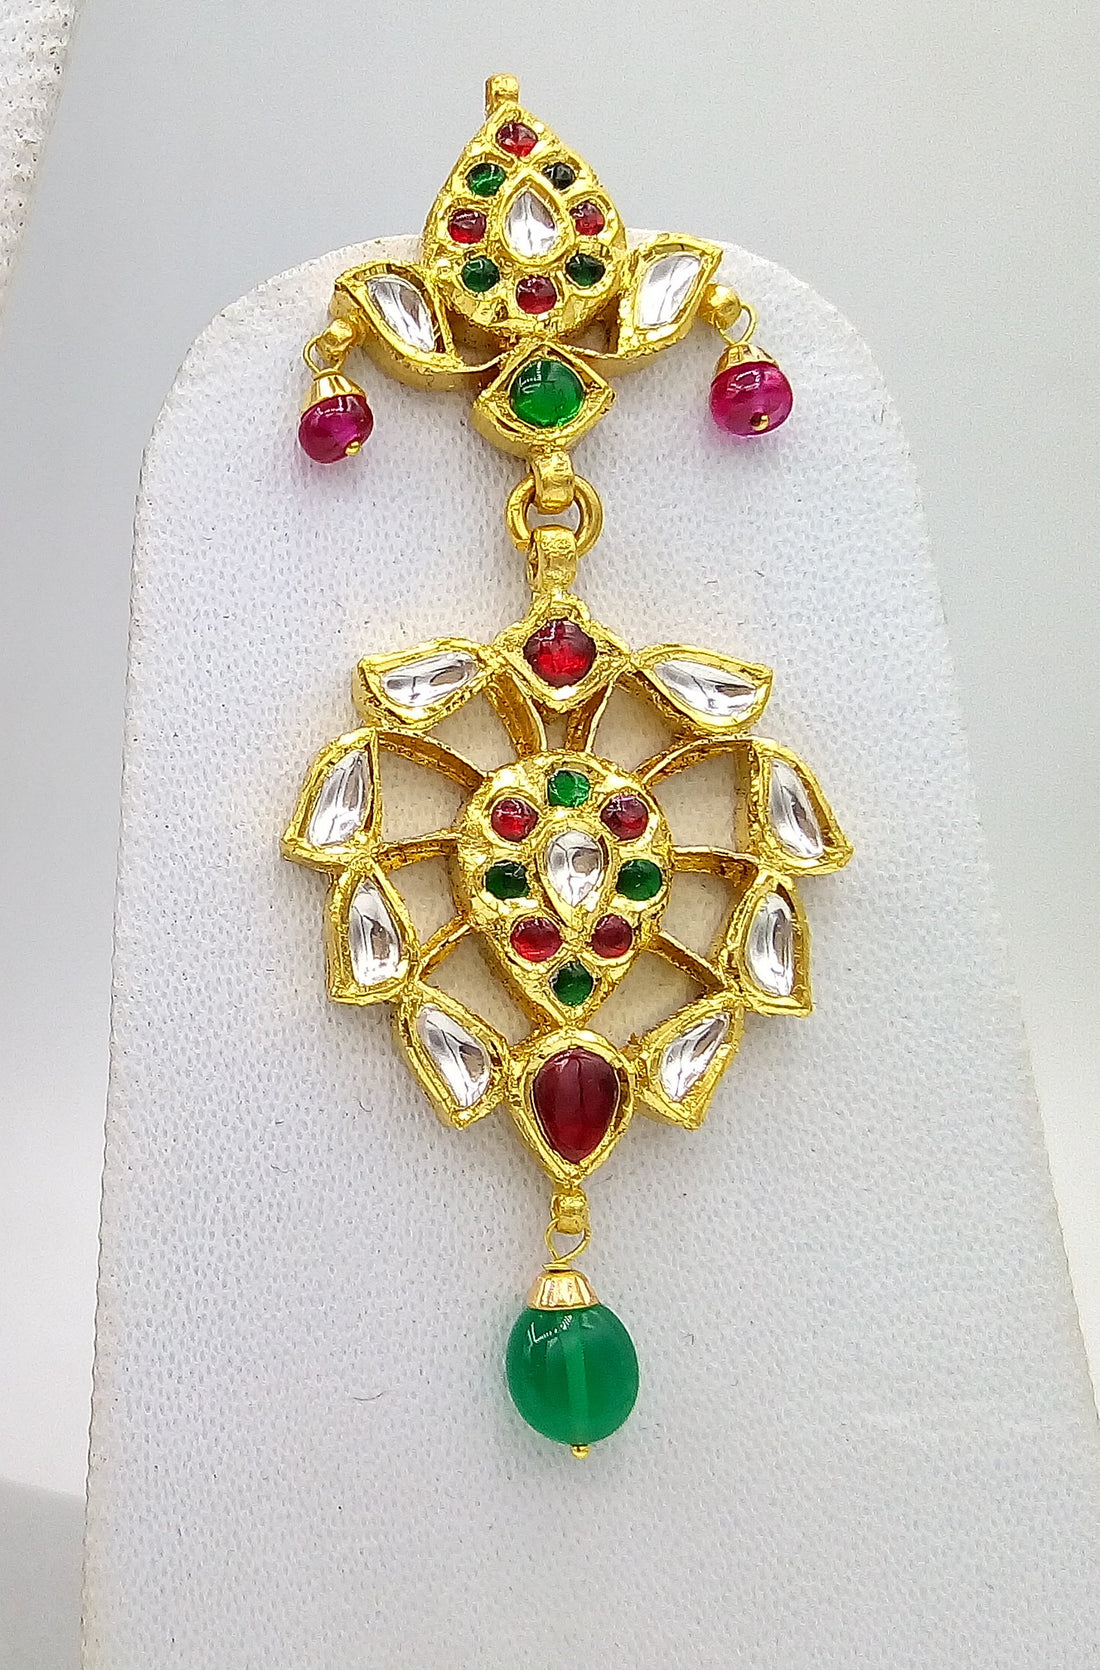 22kt yellow gold handmade vintage antique kundan jadau stone earrings Fabulous wedding anniversary gifting women's jewelry set19 - TRIBAL ORNAMENTS